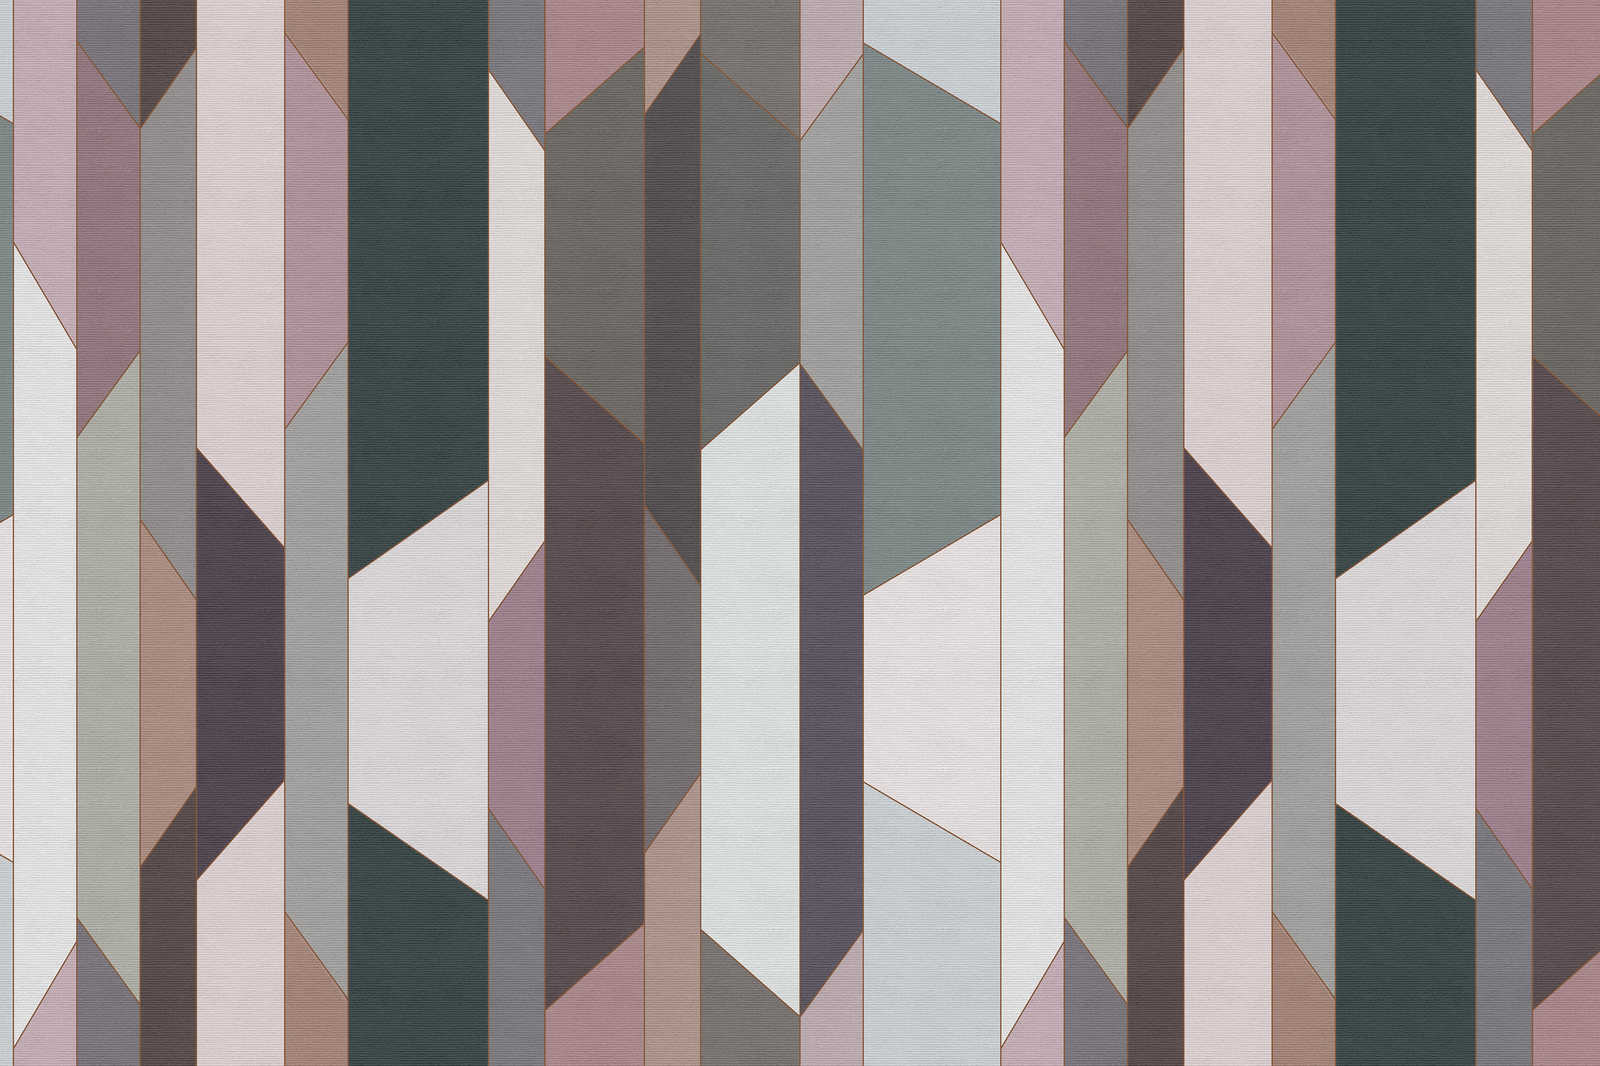             Fold 2 - Canvas painting with geometric retro pattern - 1.20 m x 0.80 m
        